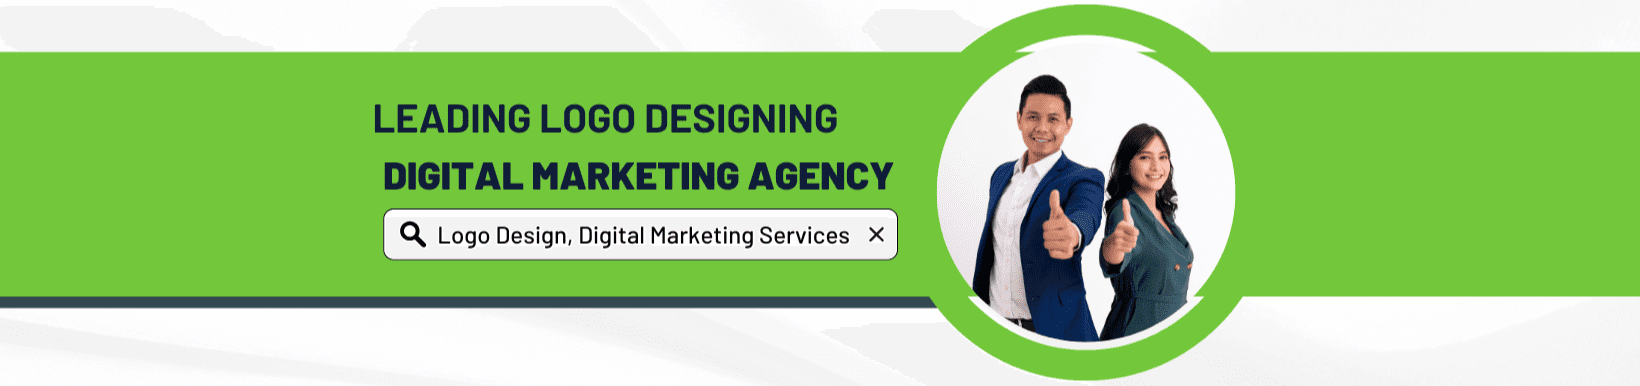 logo designing and digital marketing services agency